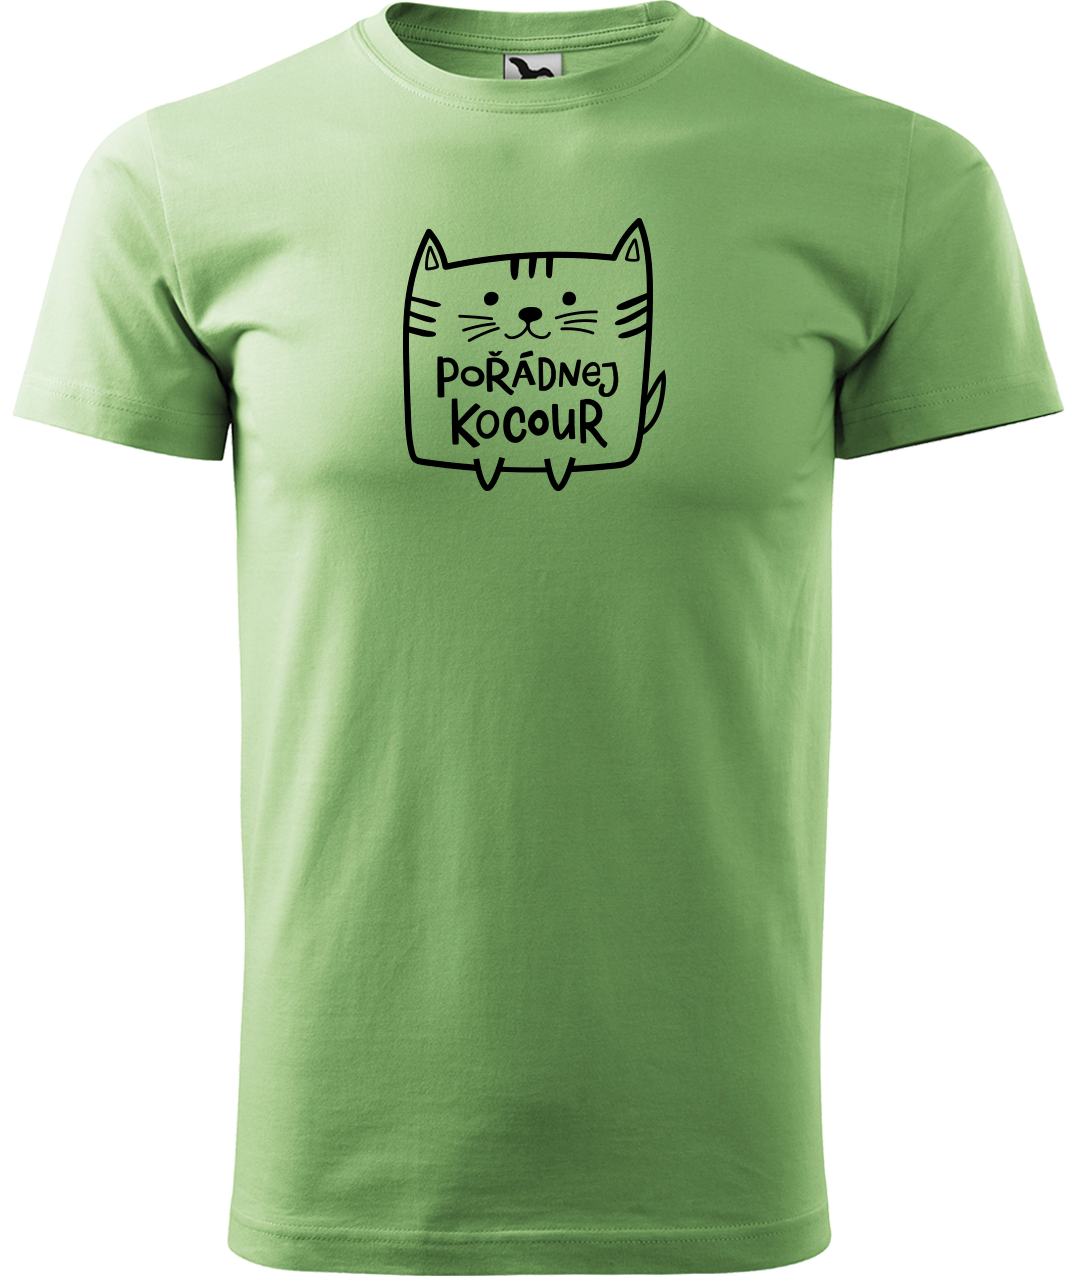 Pánské tričko s kočkou - Pořádnej kocour Velikost: M, Barva: Apple Green (92)